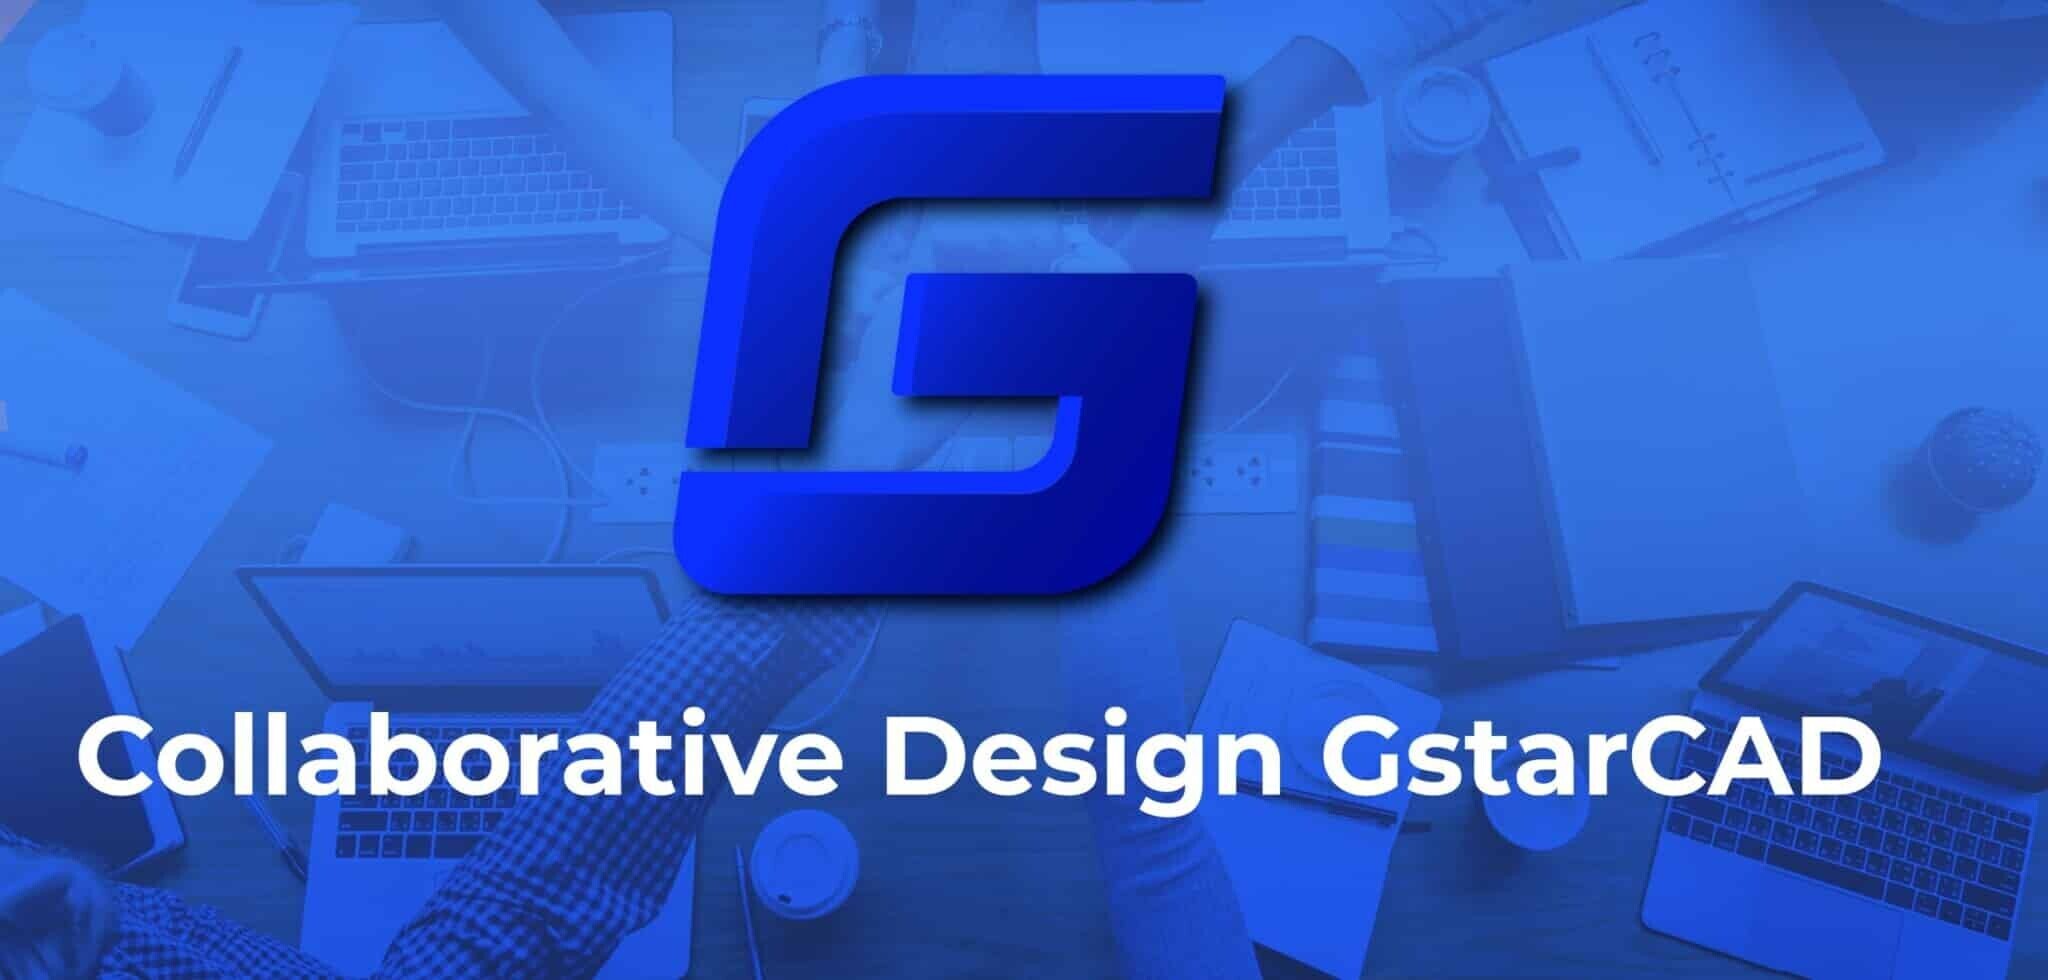 Gstarcad Collaboration: Dwg-Based Collaborative Design Platform